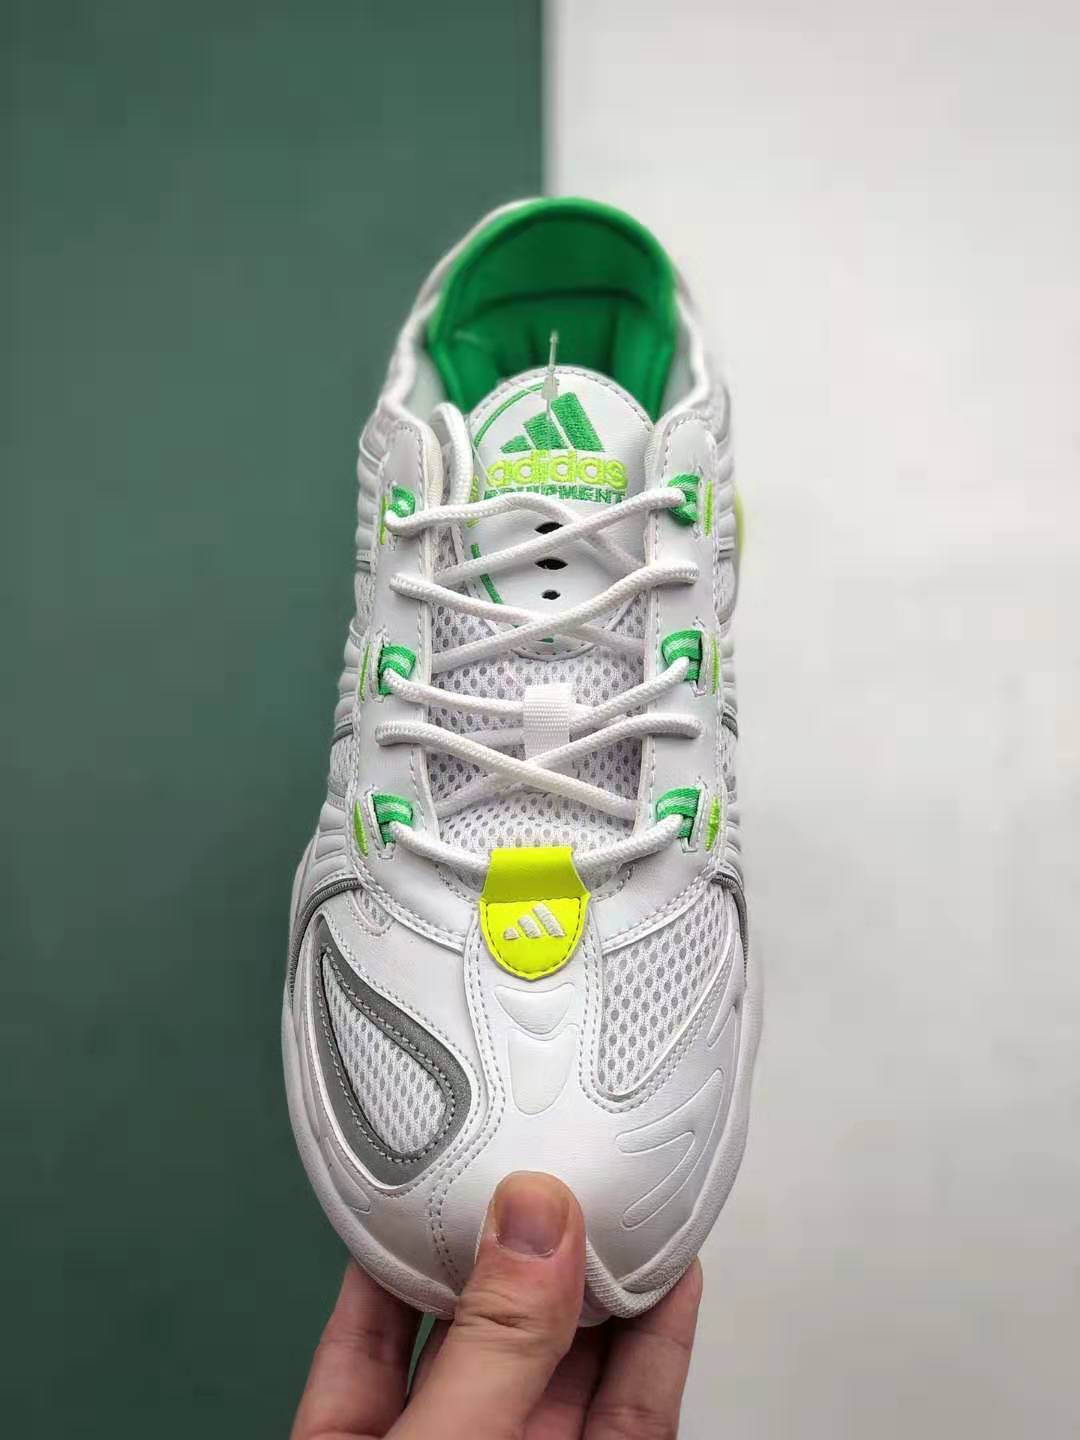 Adidas FYW S-97 Ronnie Fieg White Neon Sneakers | EF3646